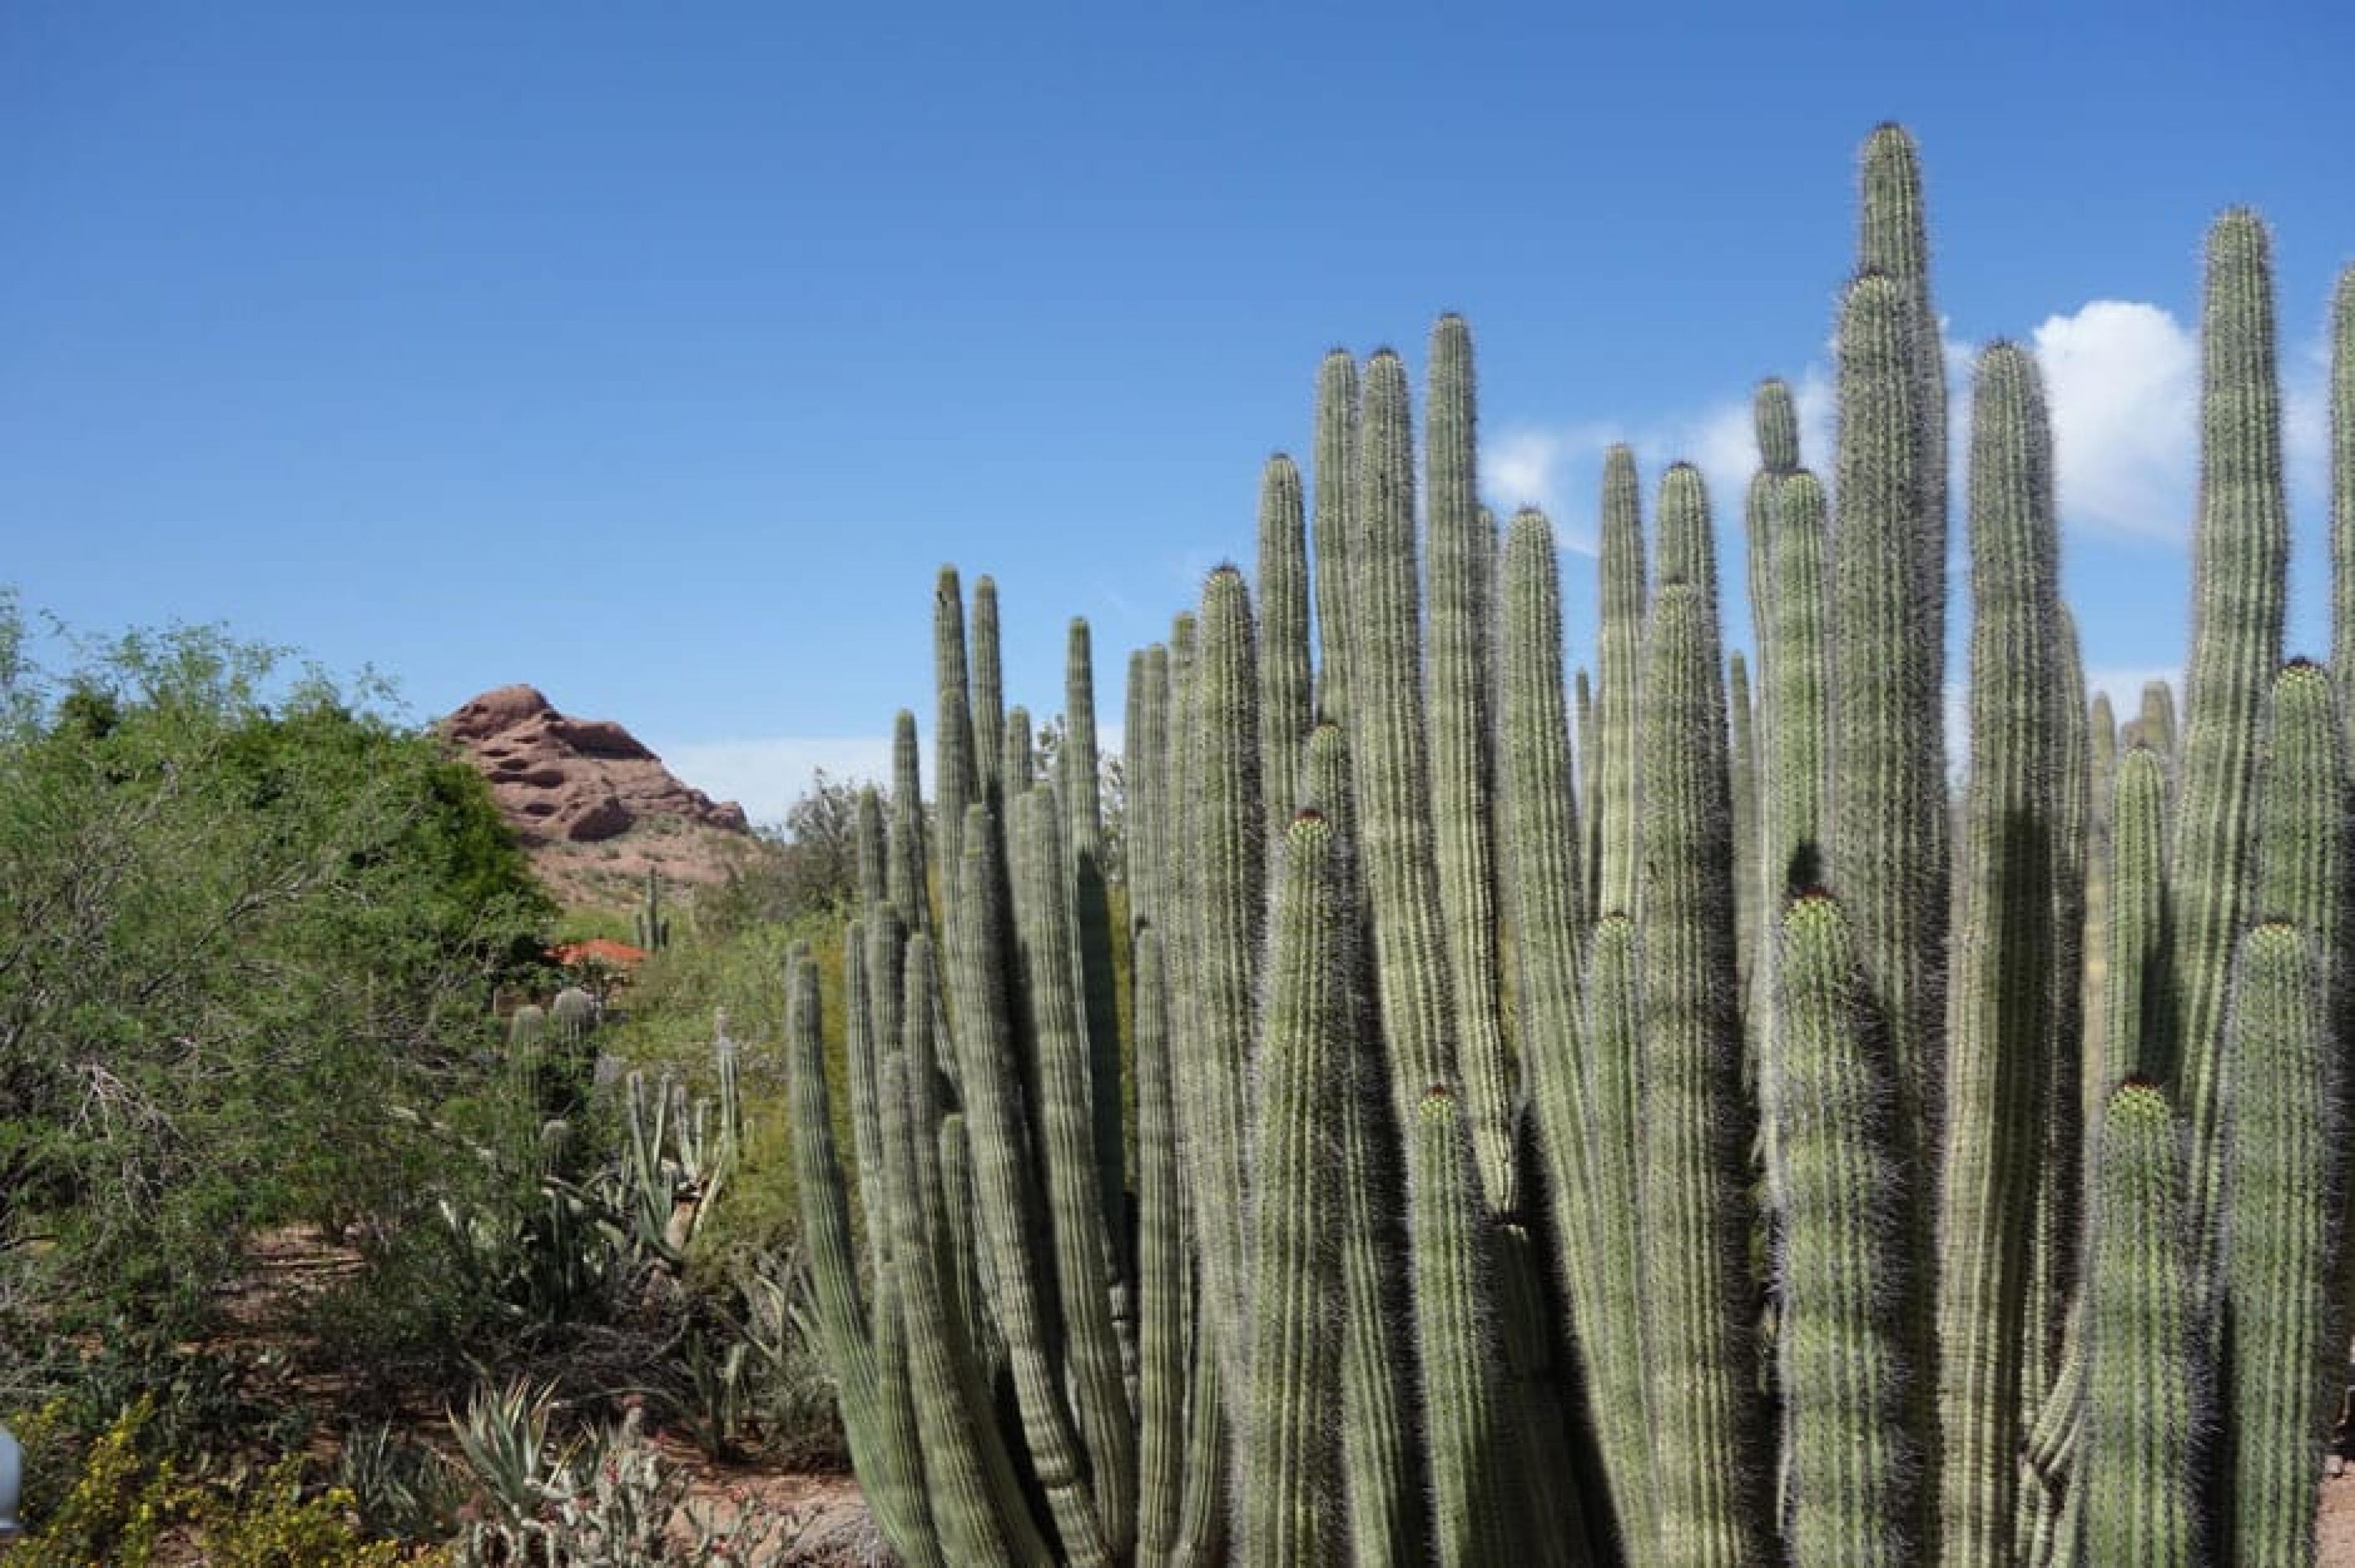 Coapse at Desert Botanical Garden,Arizona, American West